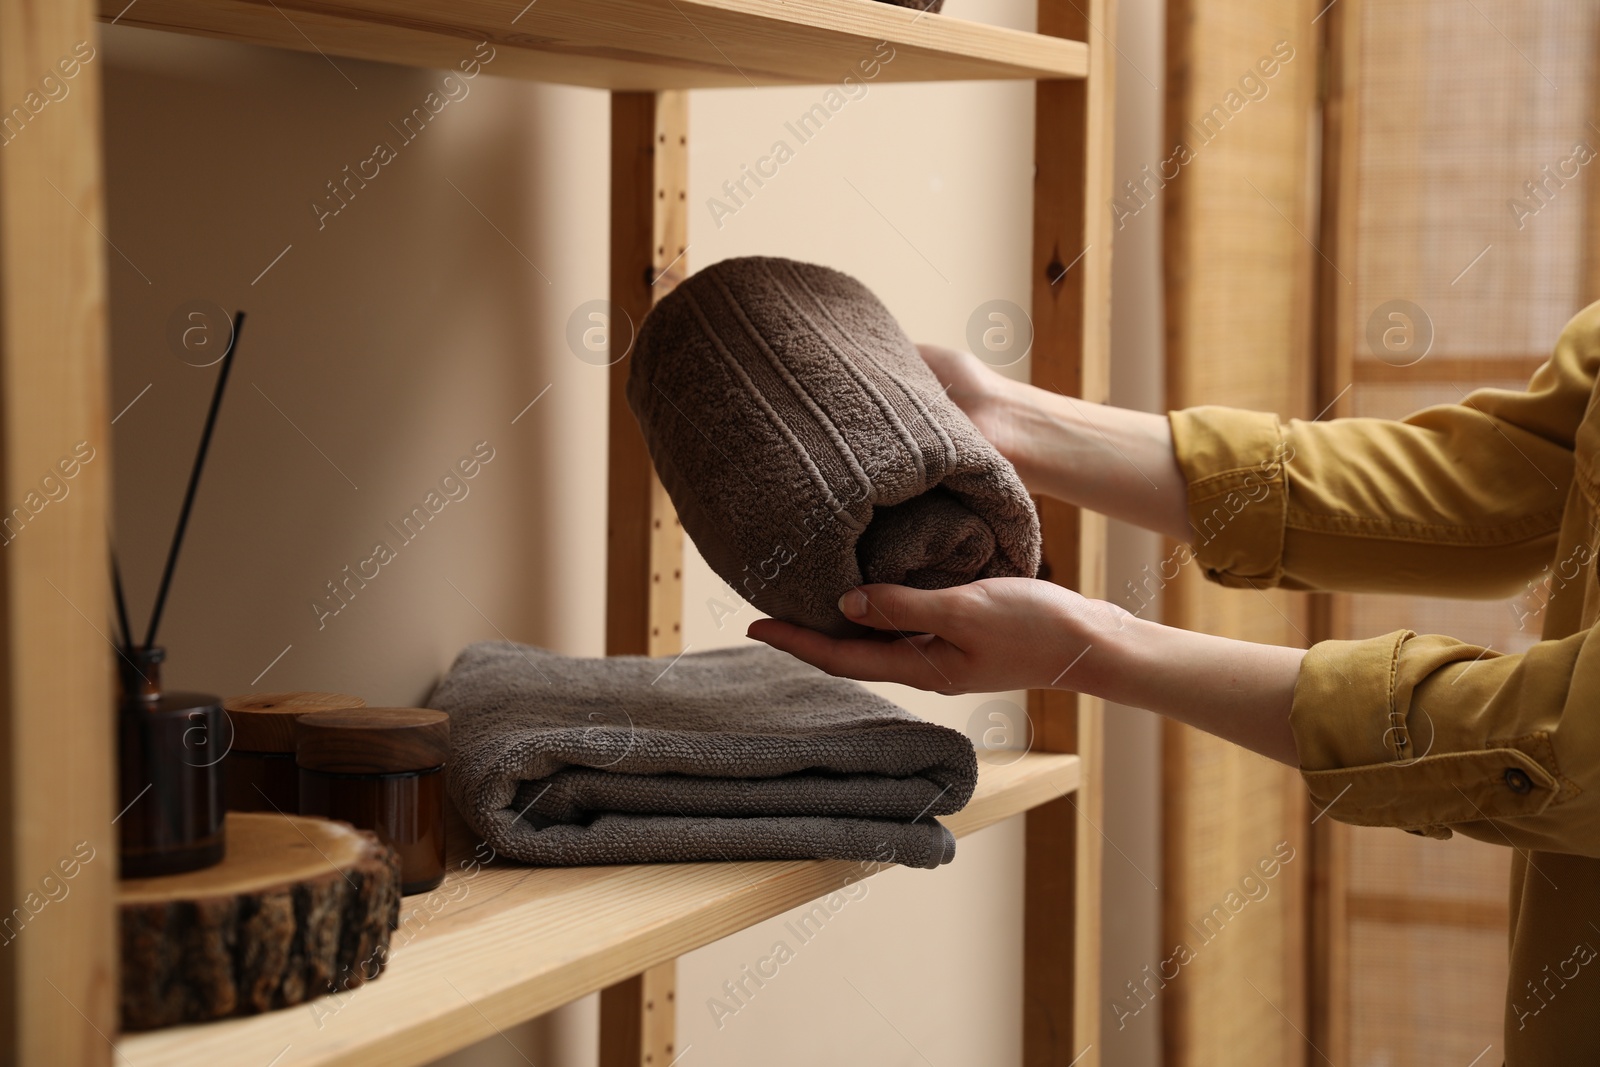 Photo of Woman putting rolled towel onto shelf indoors, closeup